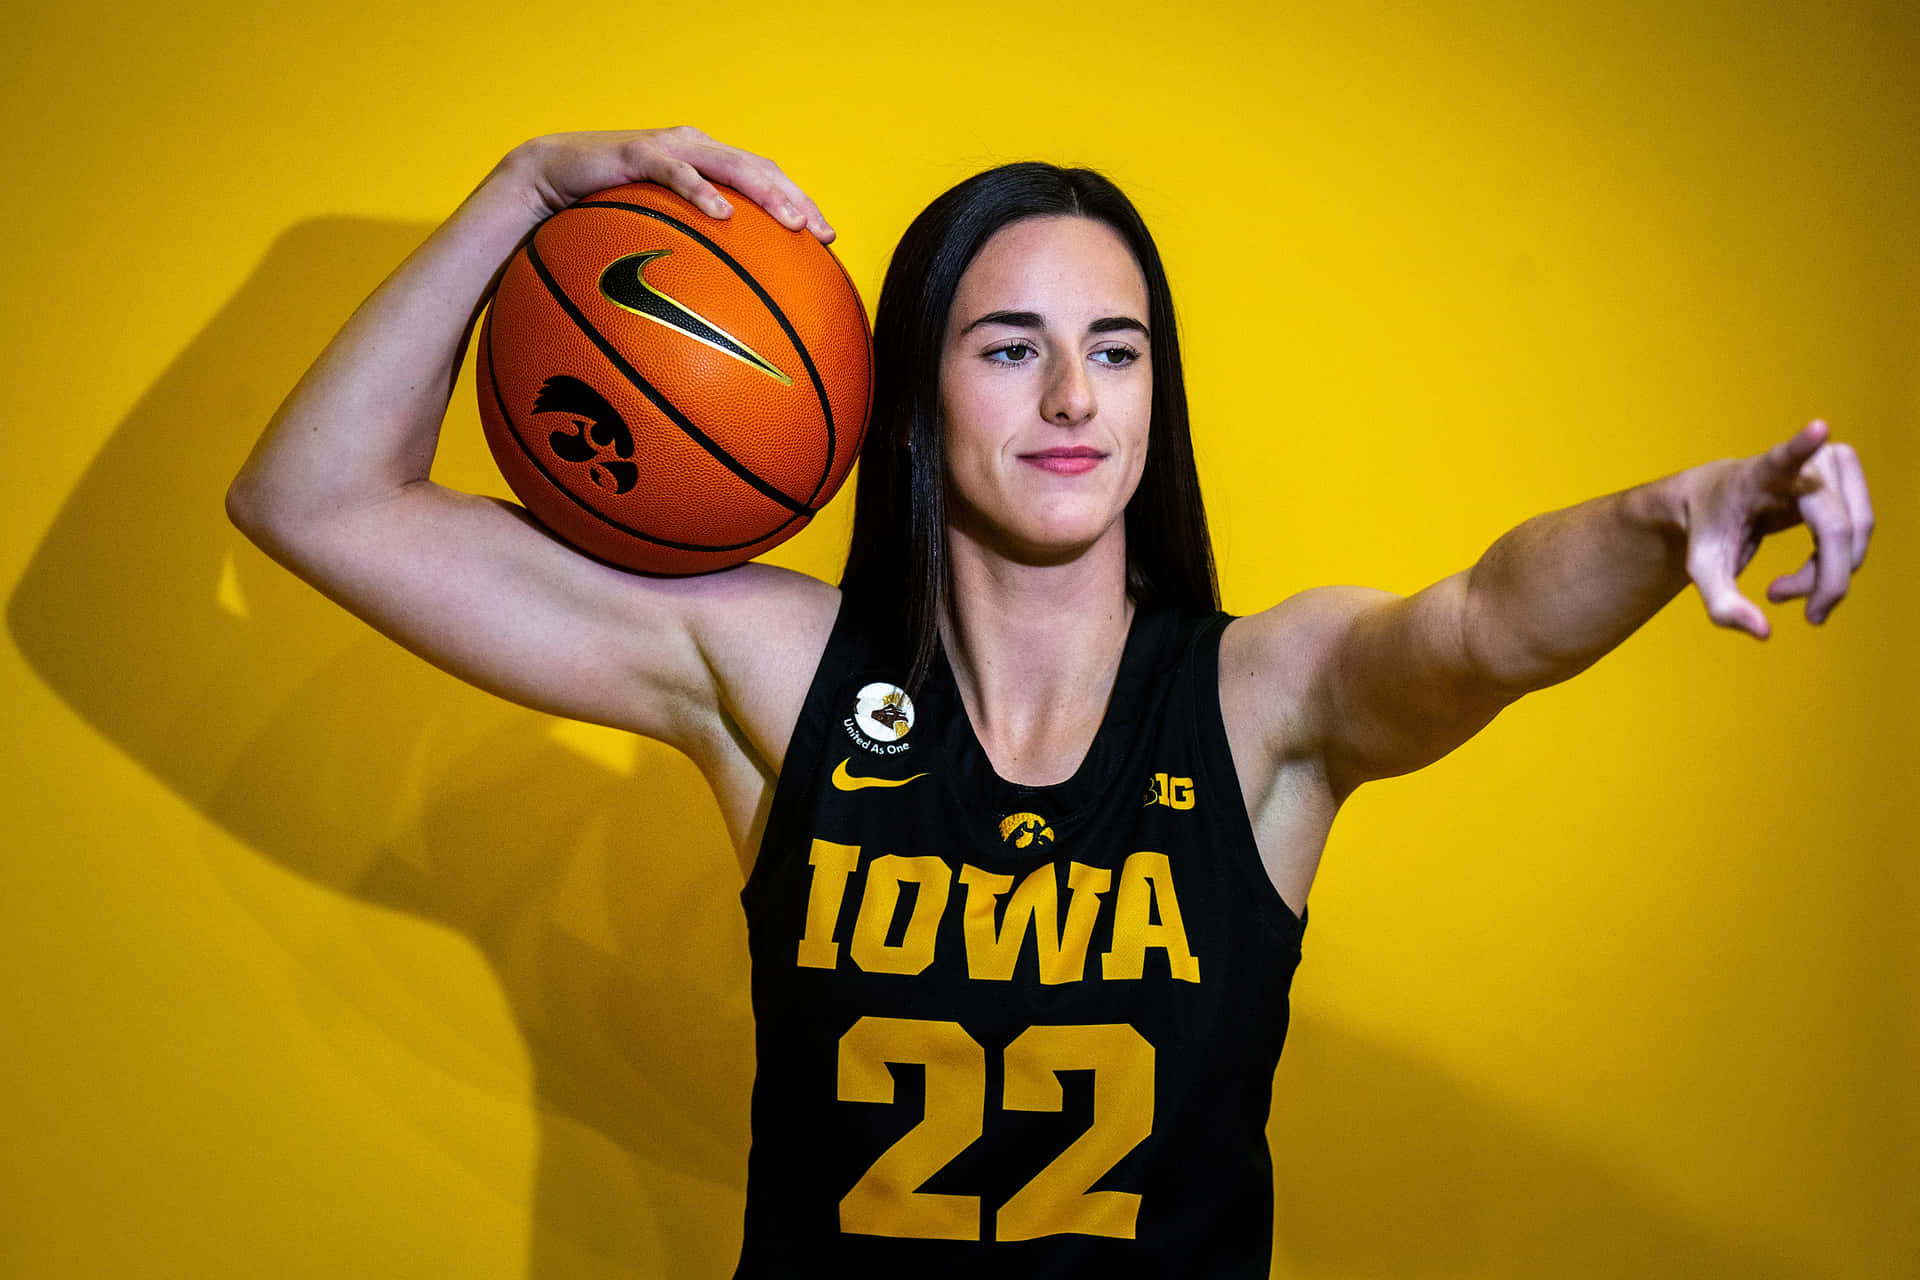 Iowa Basketball Player Caitlin Clark22 Wallpaper